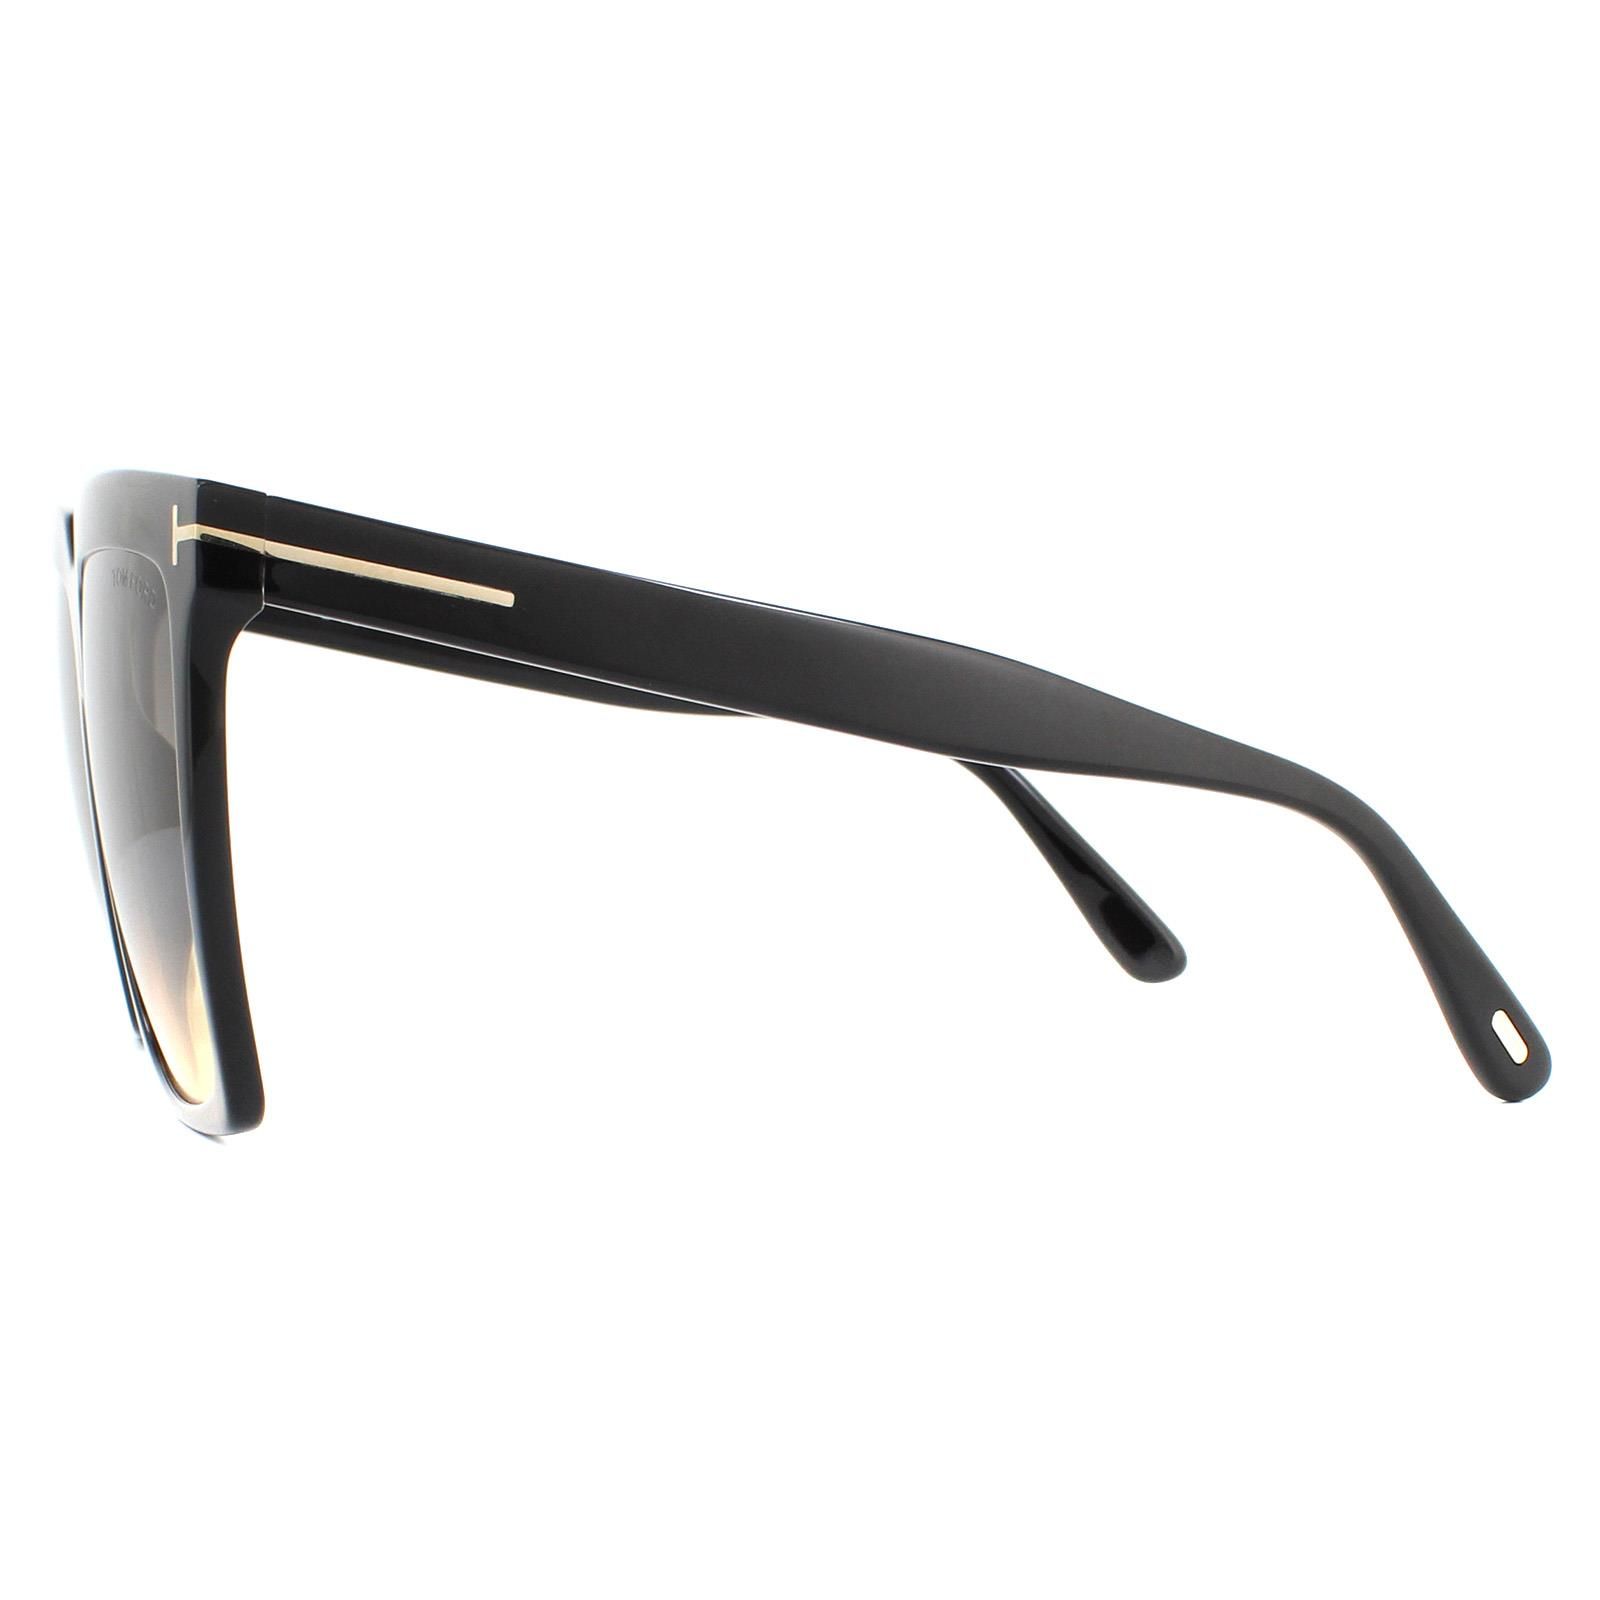 Tom Ford Sunglasses Sabrina 02 FT0764 01B Shiny Black Grey Smoke Gradient